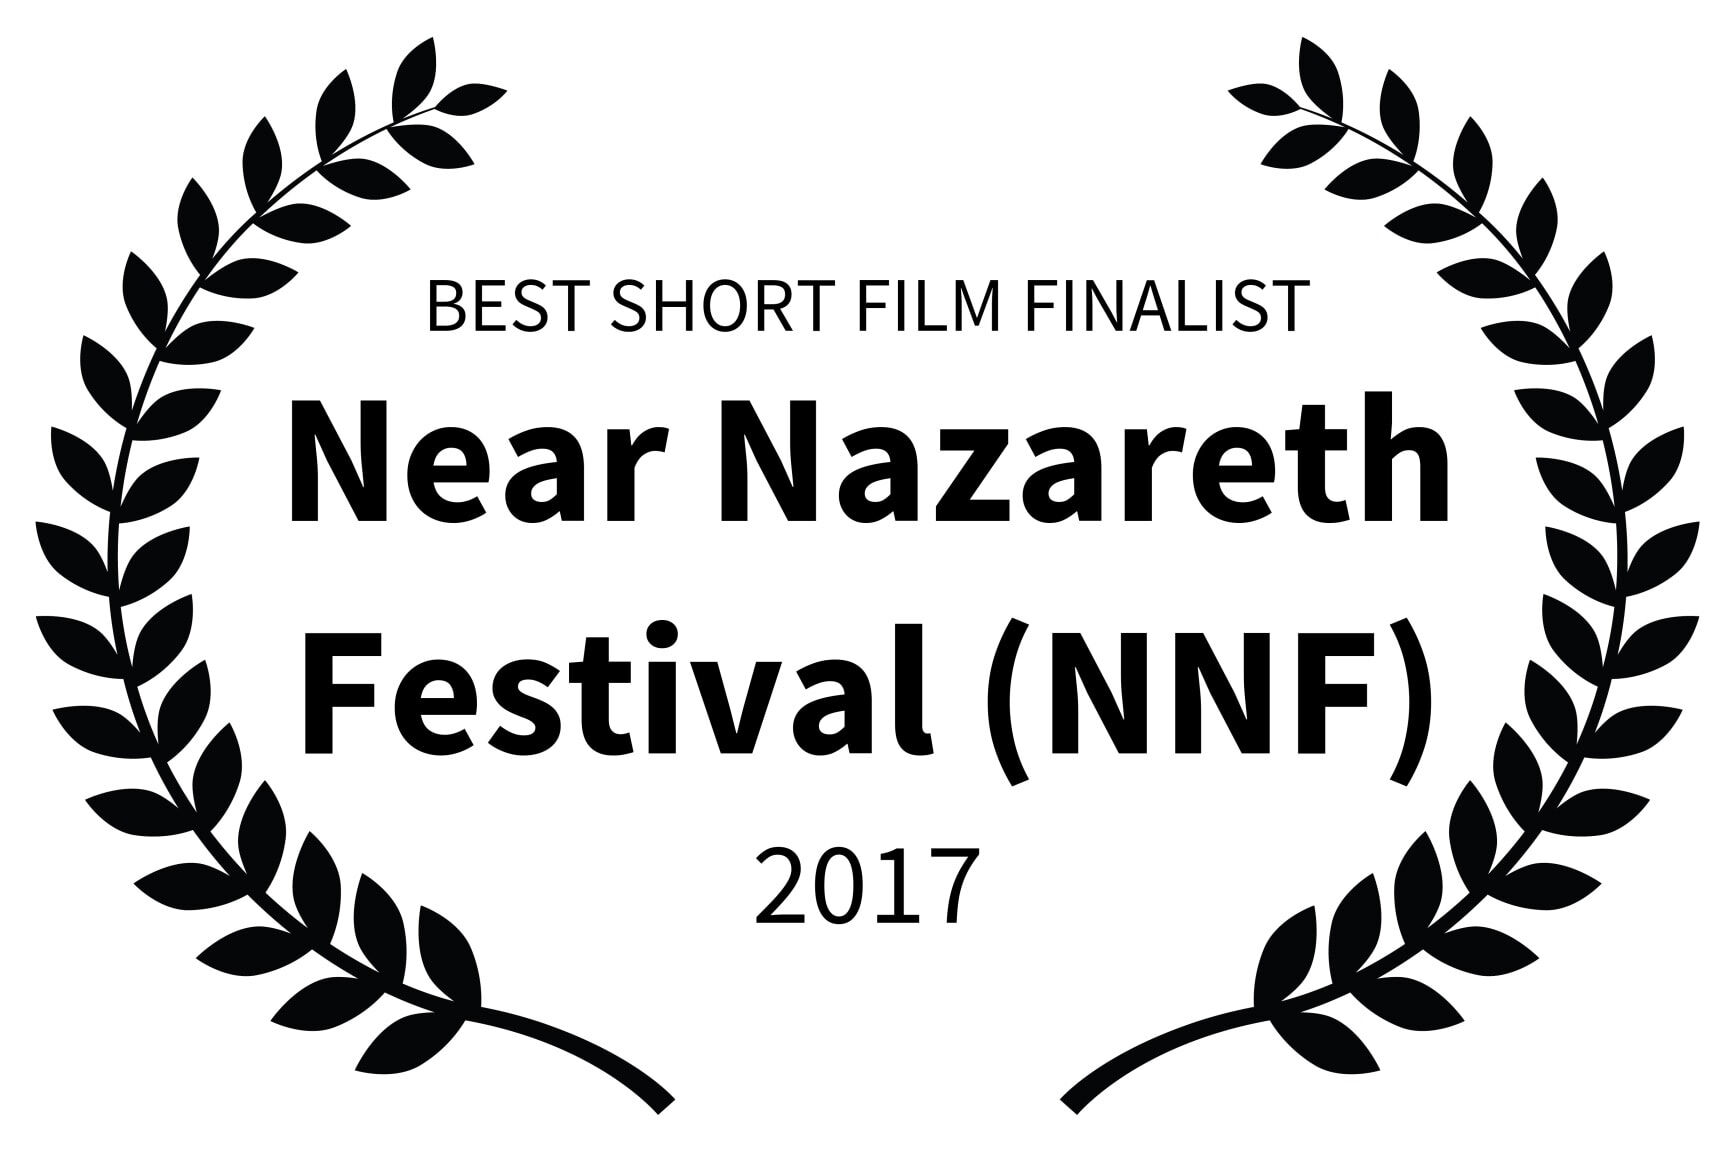 BEST SHORT FILM FINALIST - Near Nazareth Festival NNF - 2017